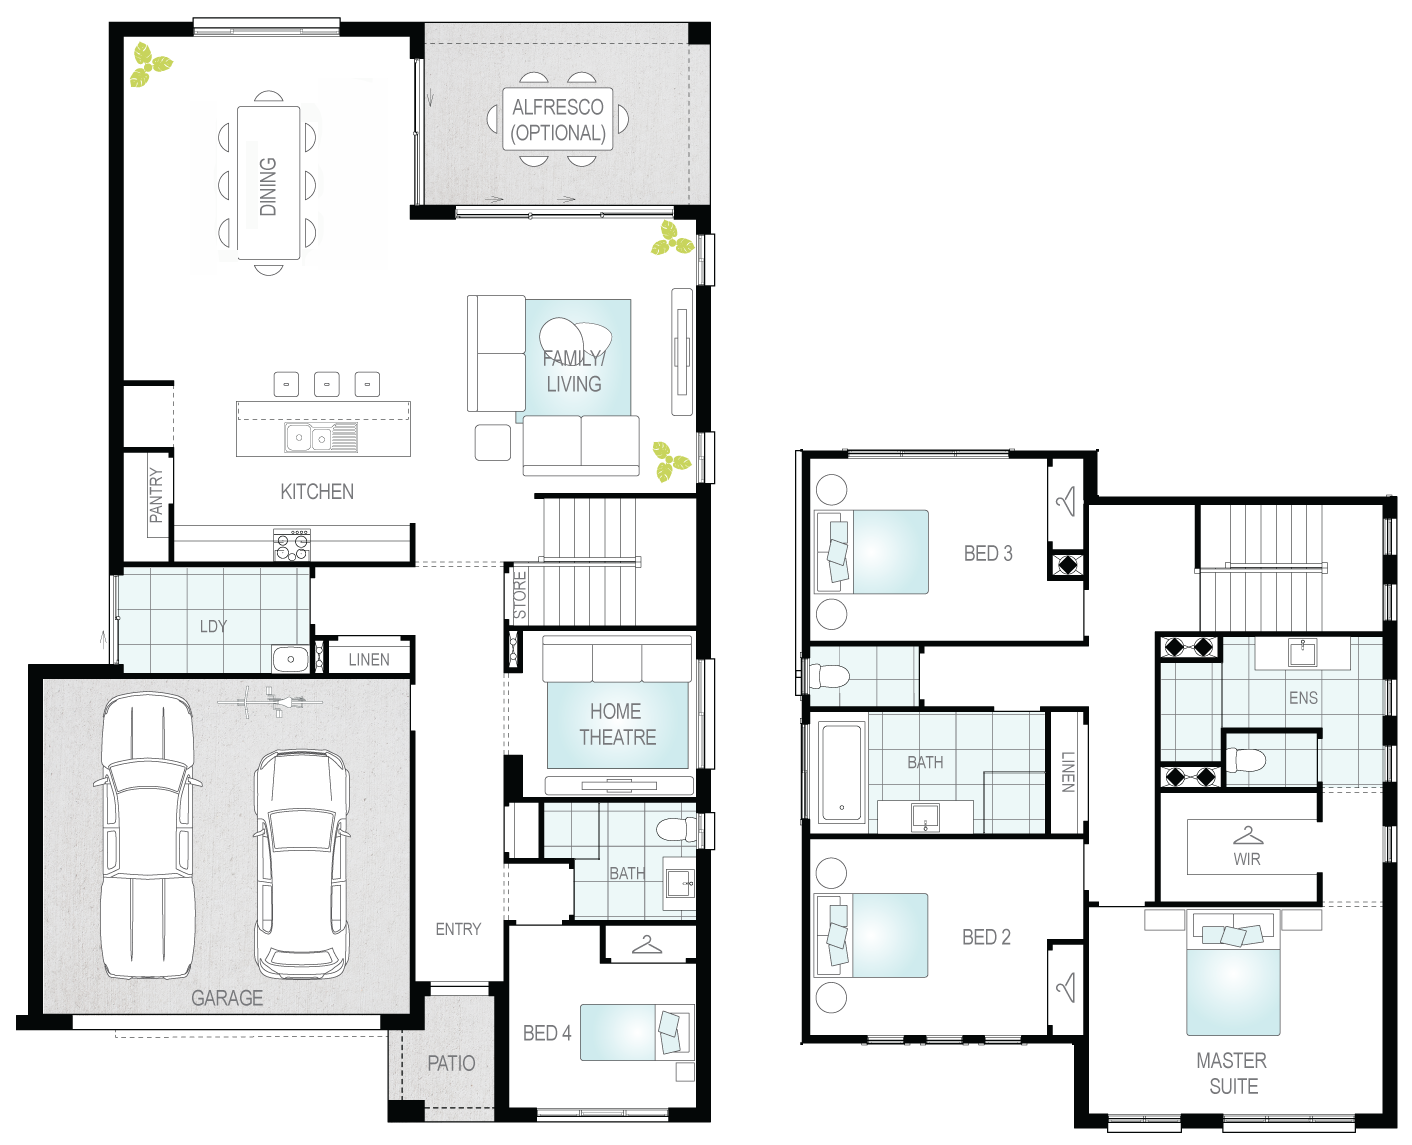 Architectural New Home Designs - Monza Floor Plans